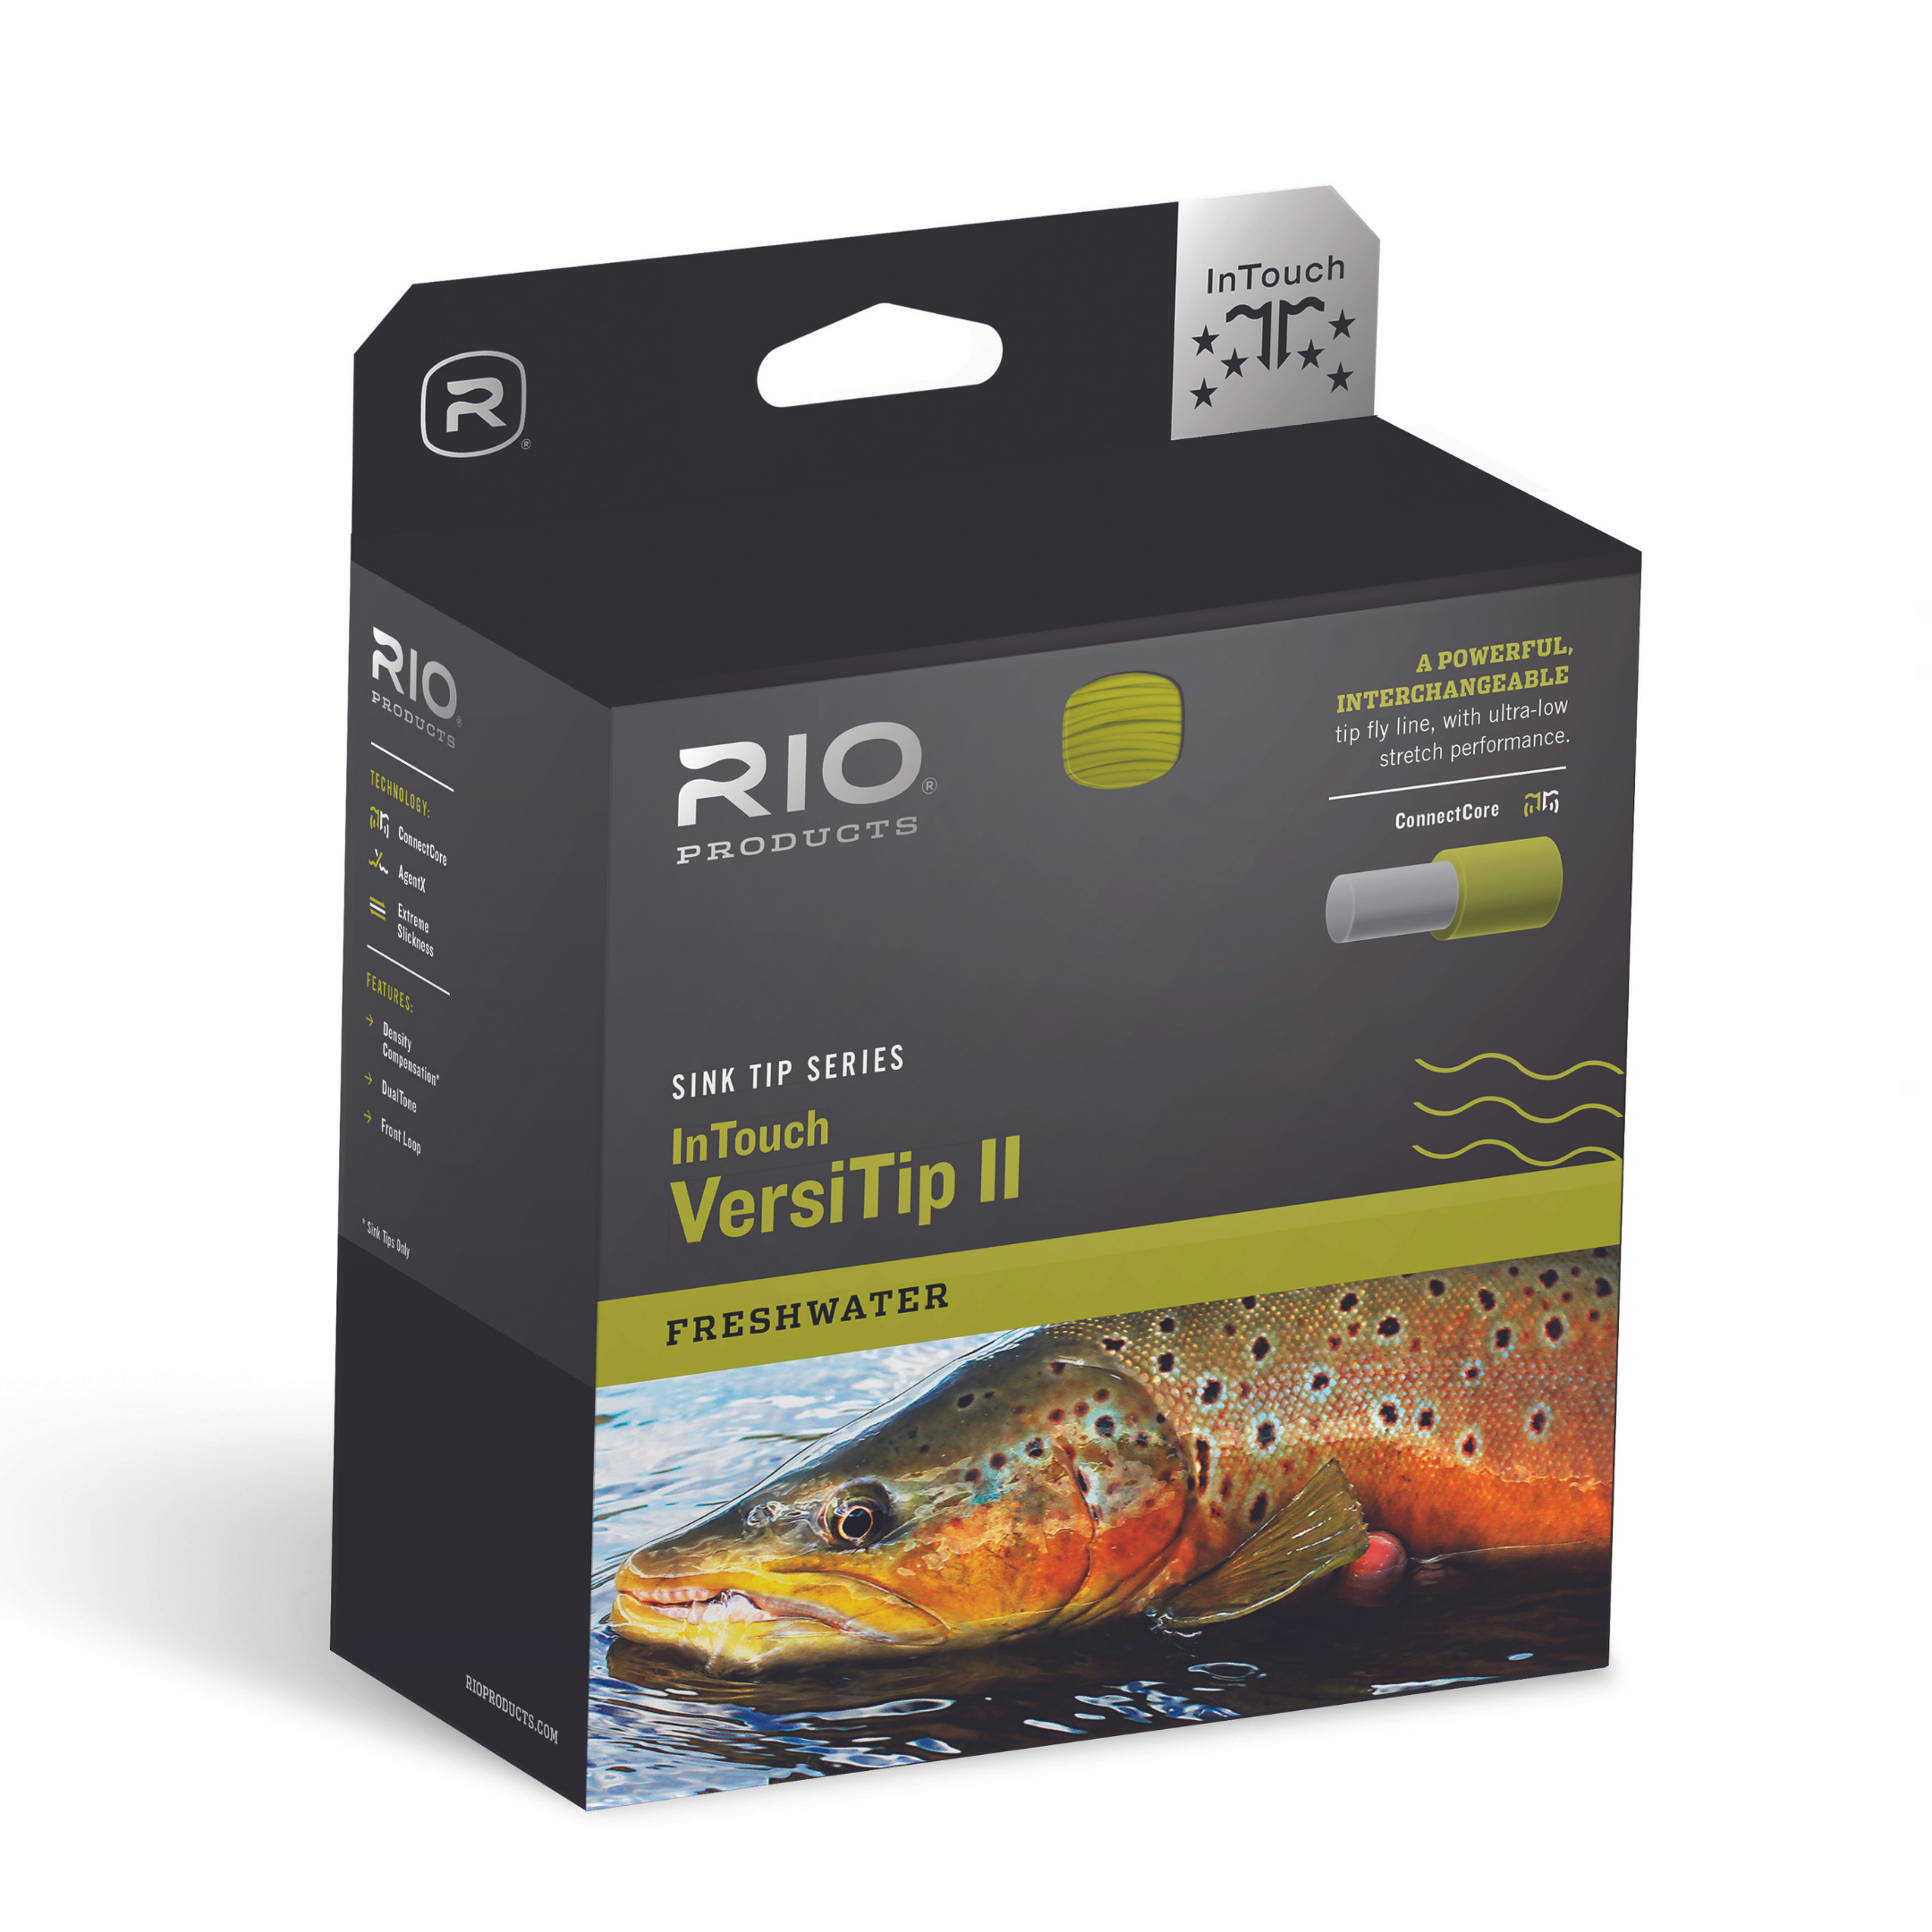 RIO Freshwater Versileader, RIO Products